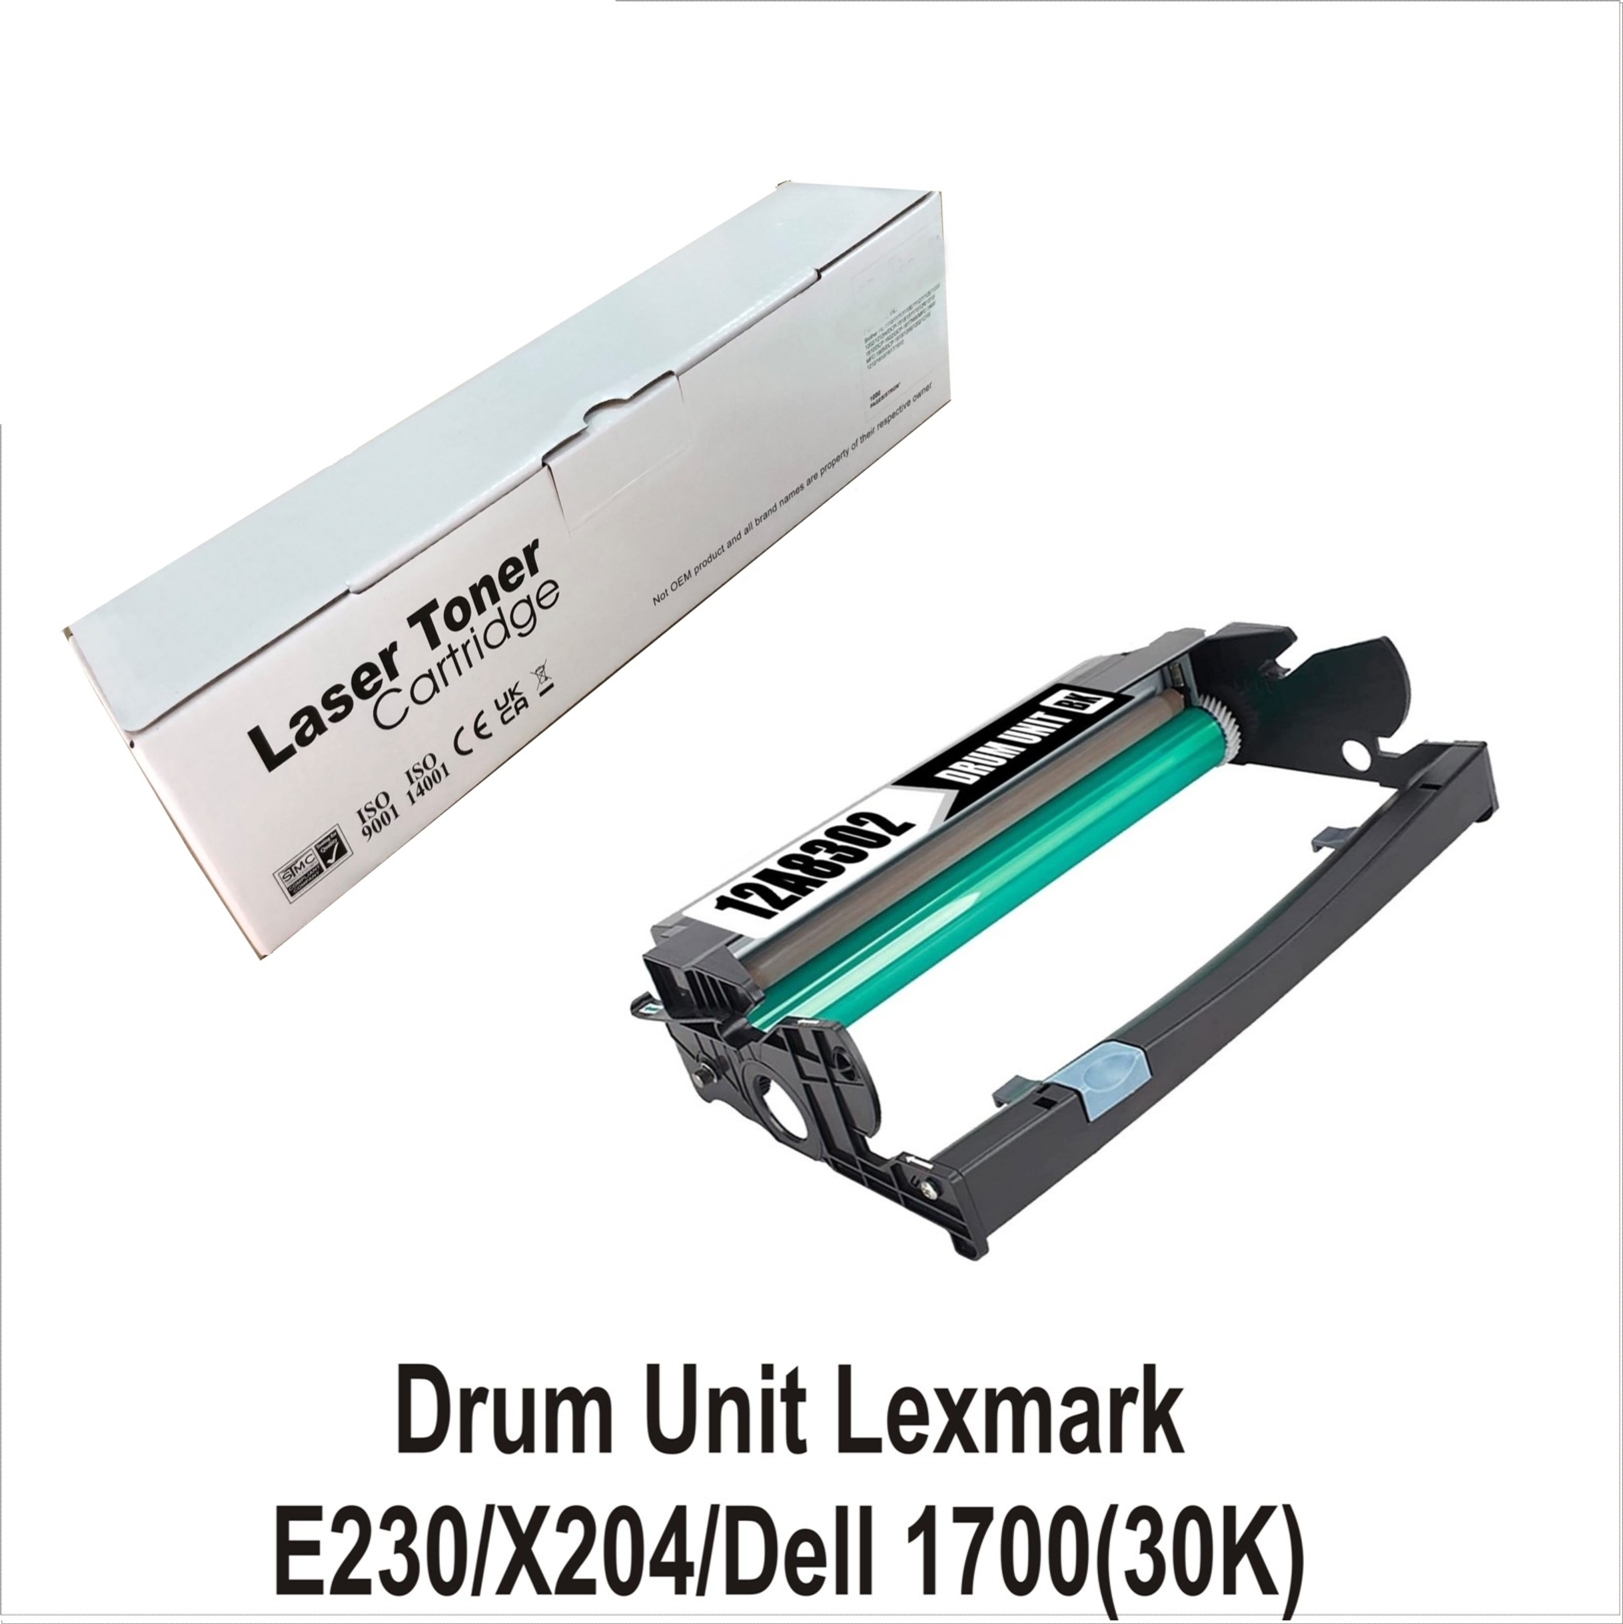 Drum Unit Lexmark E230/X204/Dell 1700(30K)WB